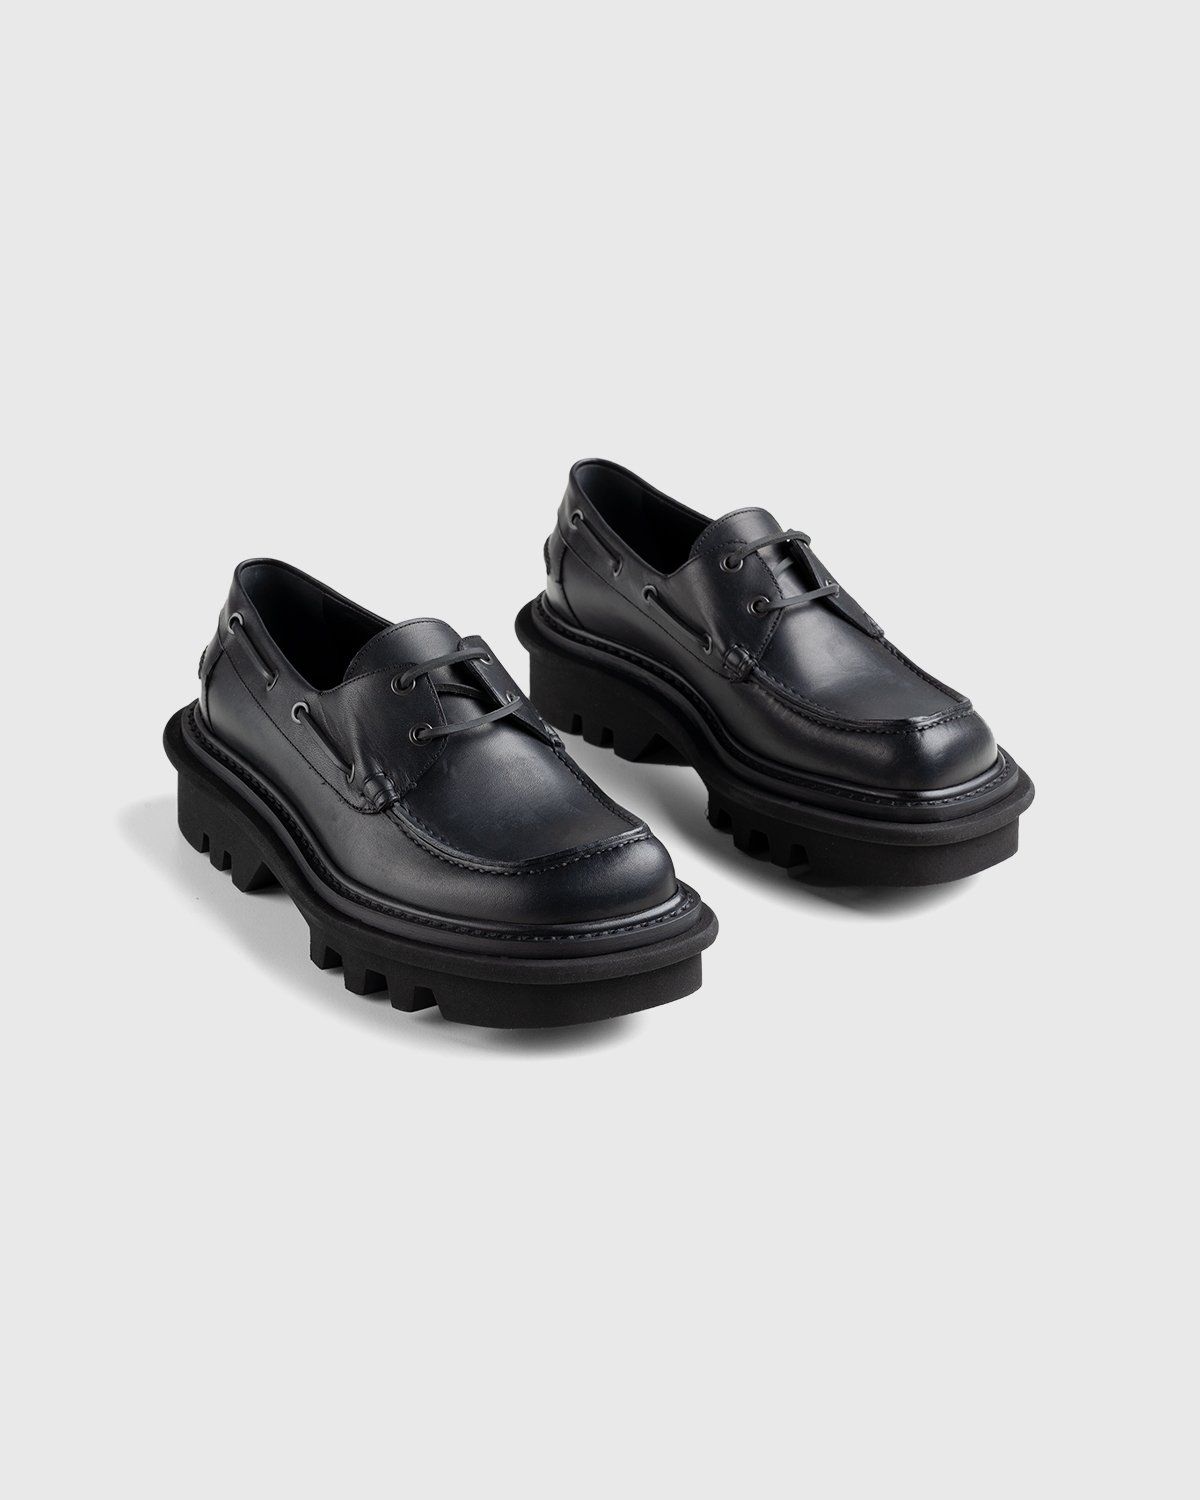 Dries van Noten – Leather Boat Shoe Black - Boat Shoes & Moccasins - Black - Image 3